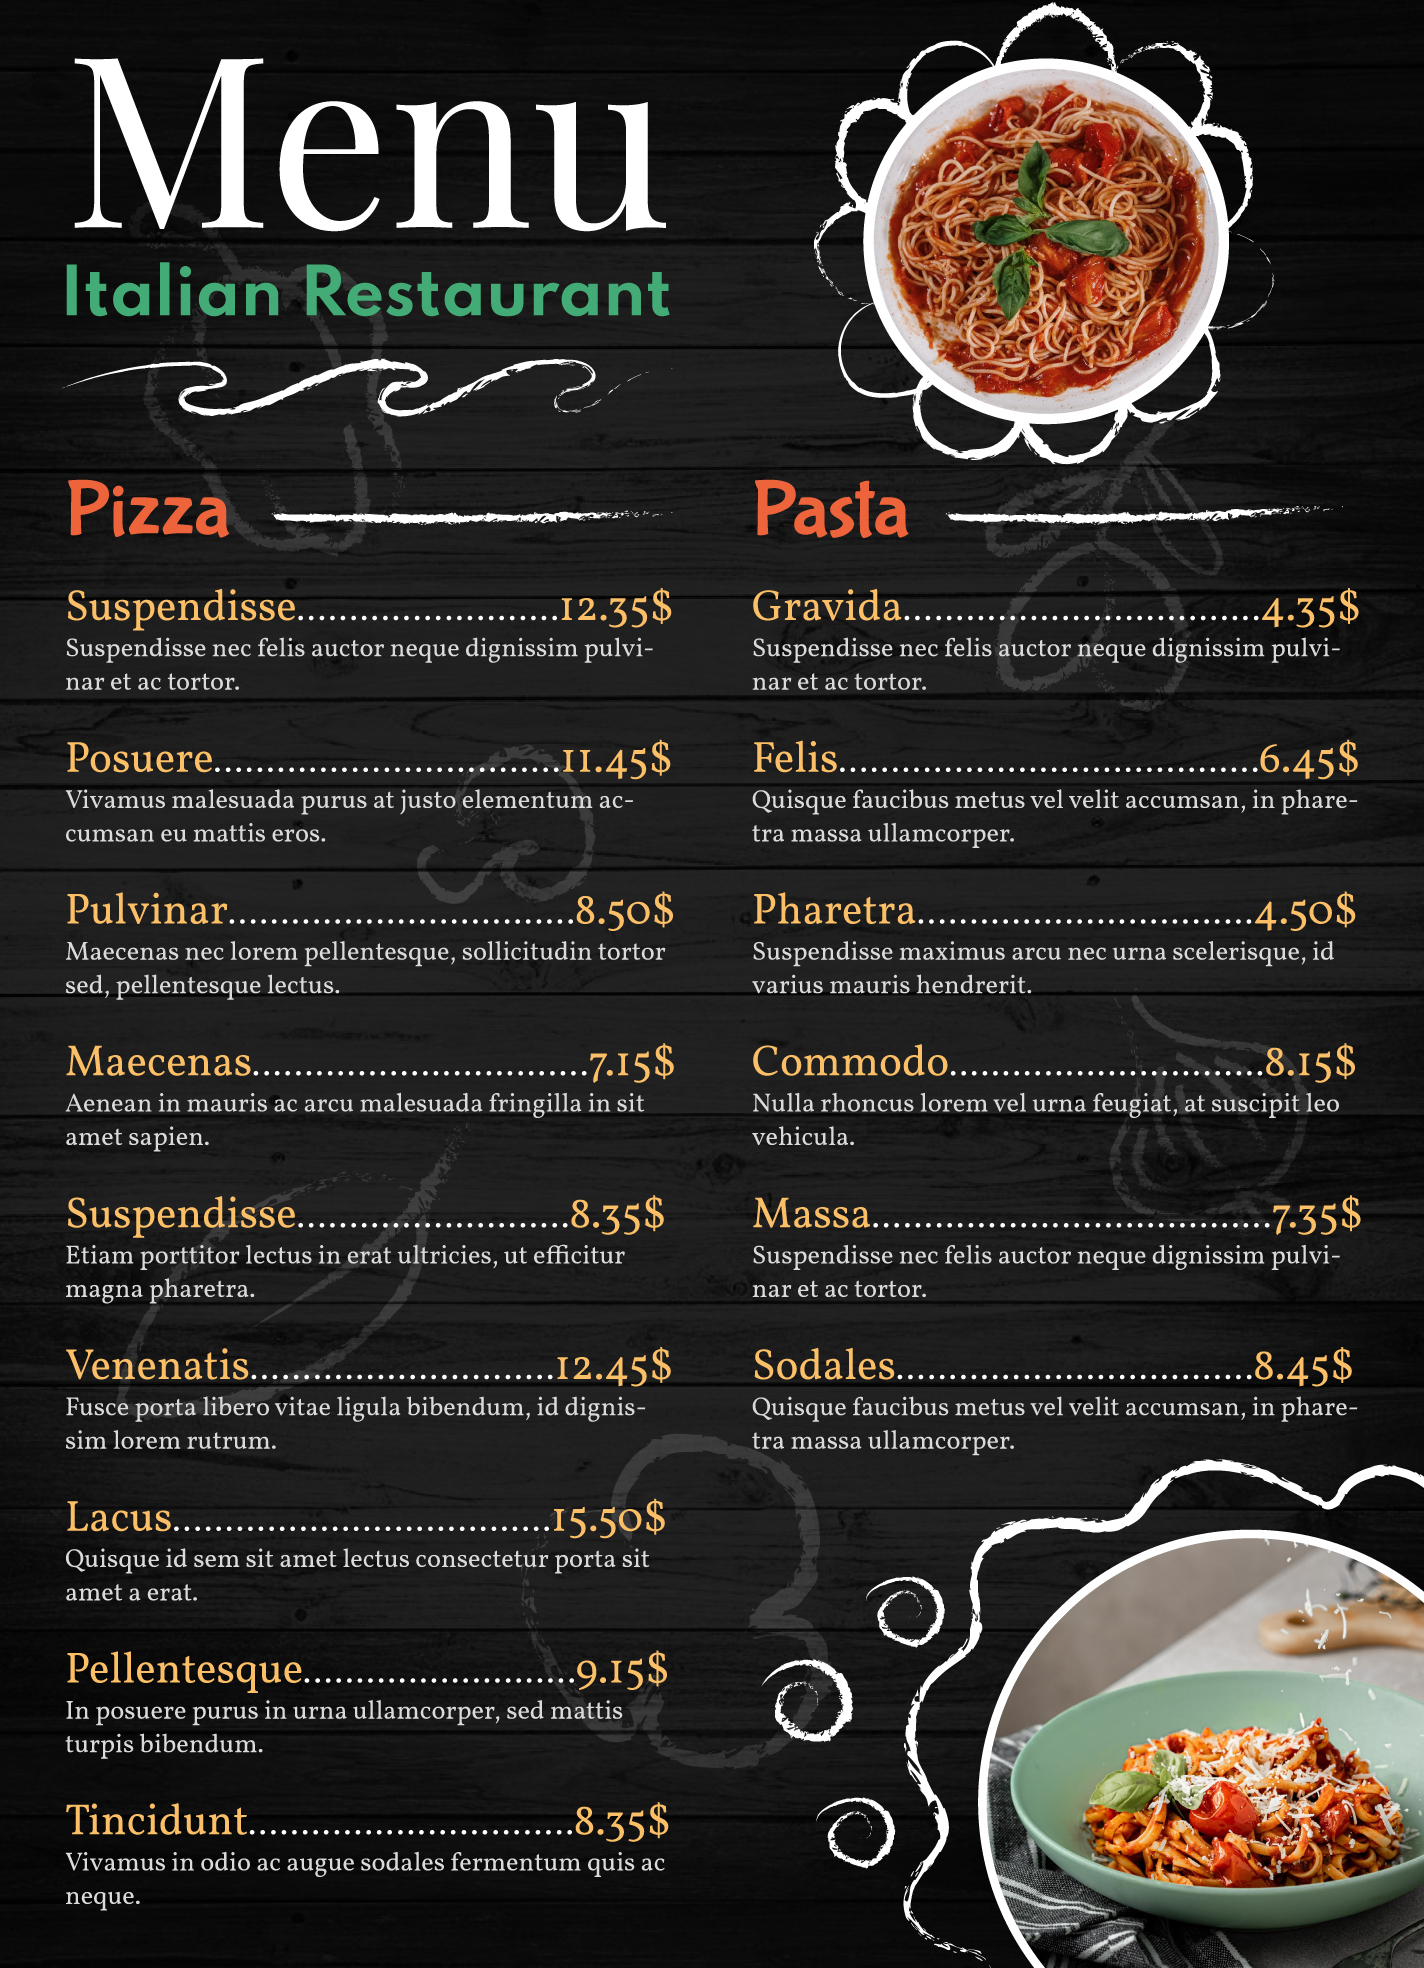 Italian Restaurant Menu Template | tunersread.com